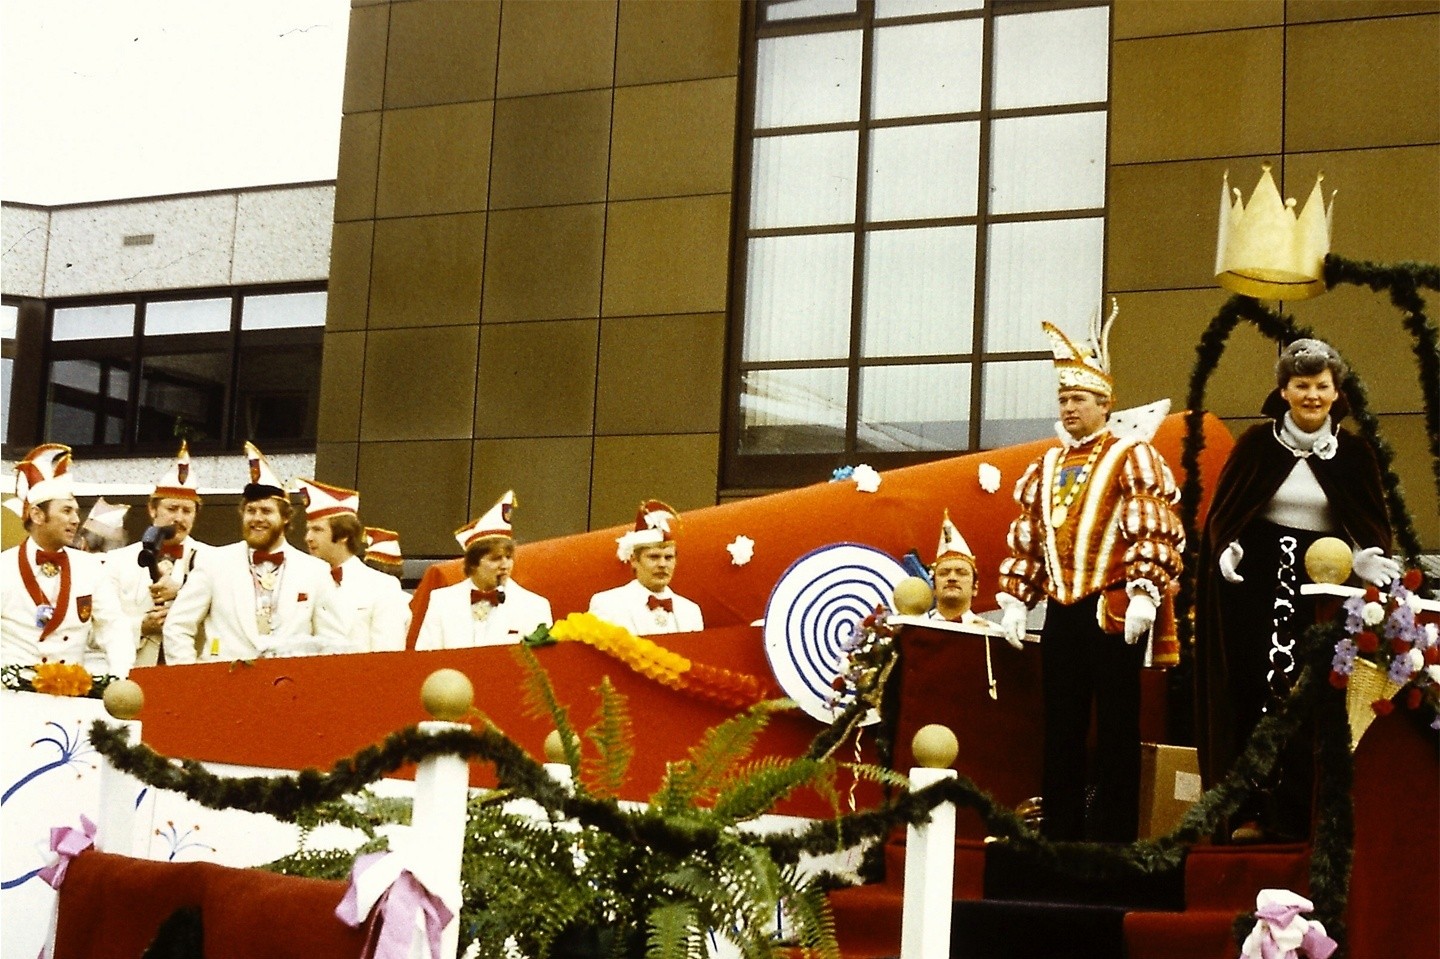 Karnevalsumzug in Bad Driburg am 25.02.1979